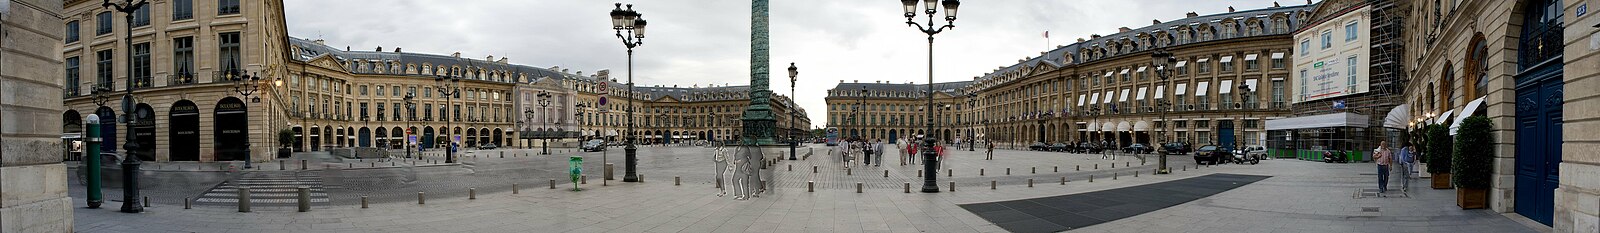 Panorama van de Place Vendôme